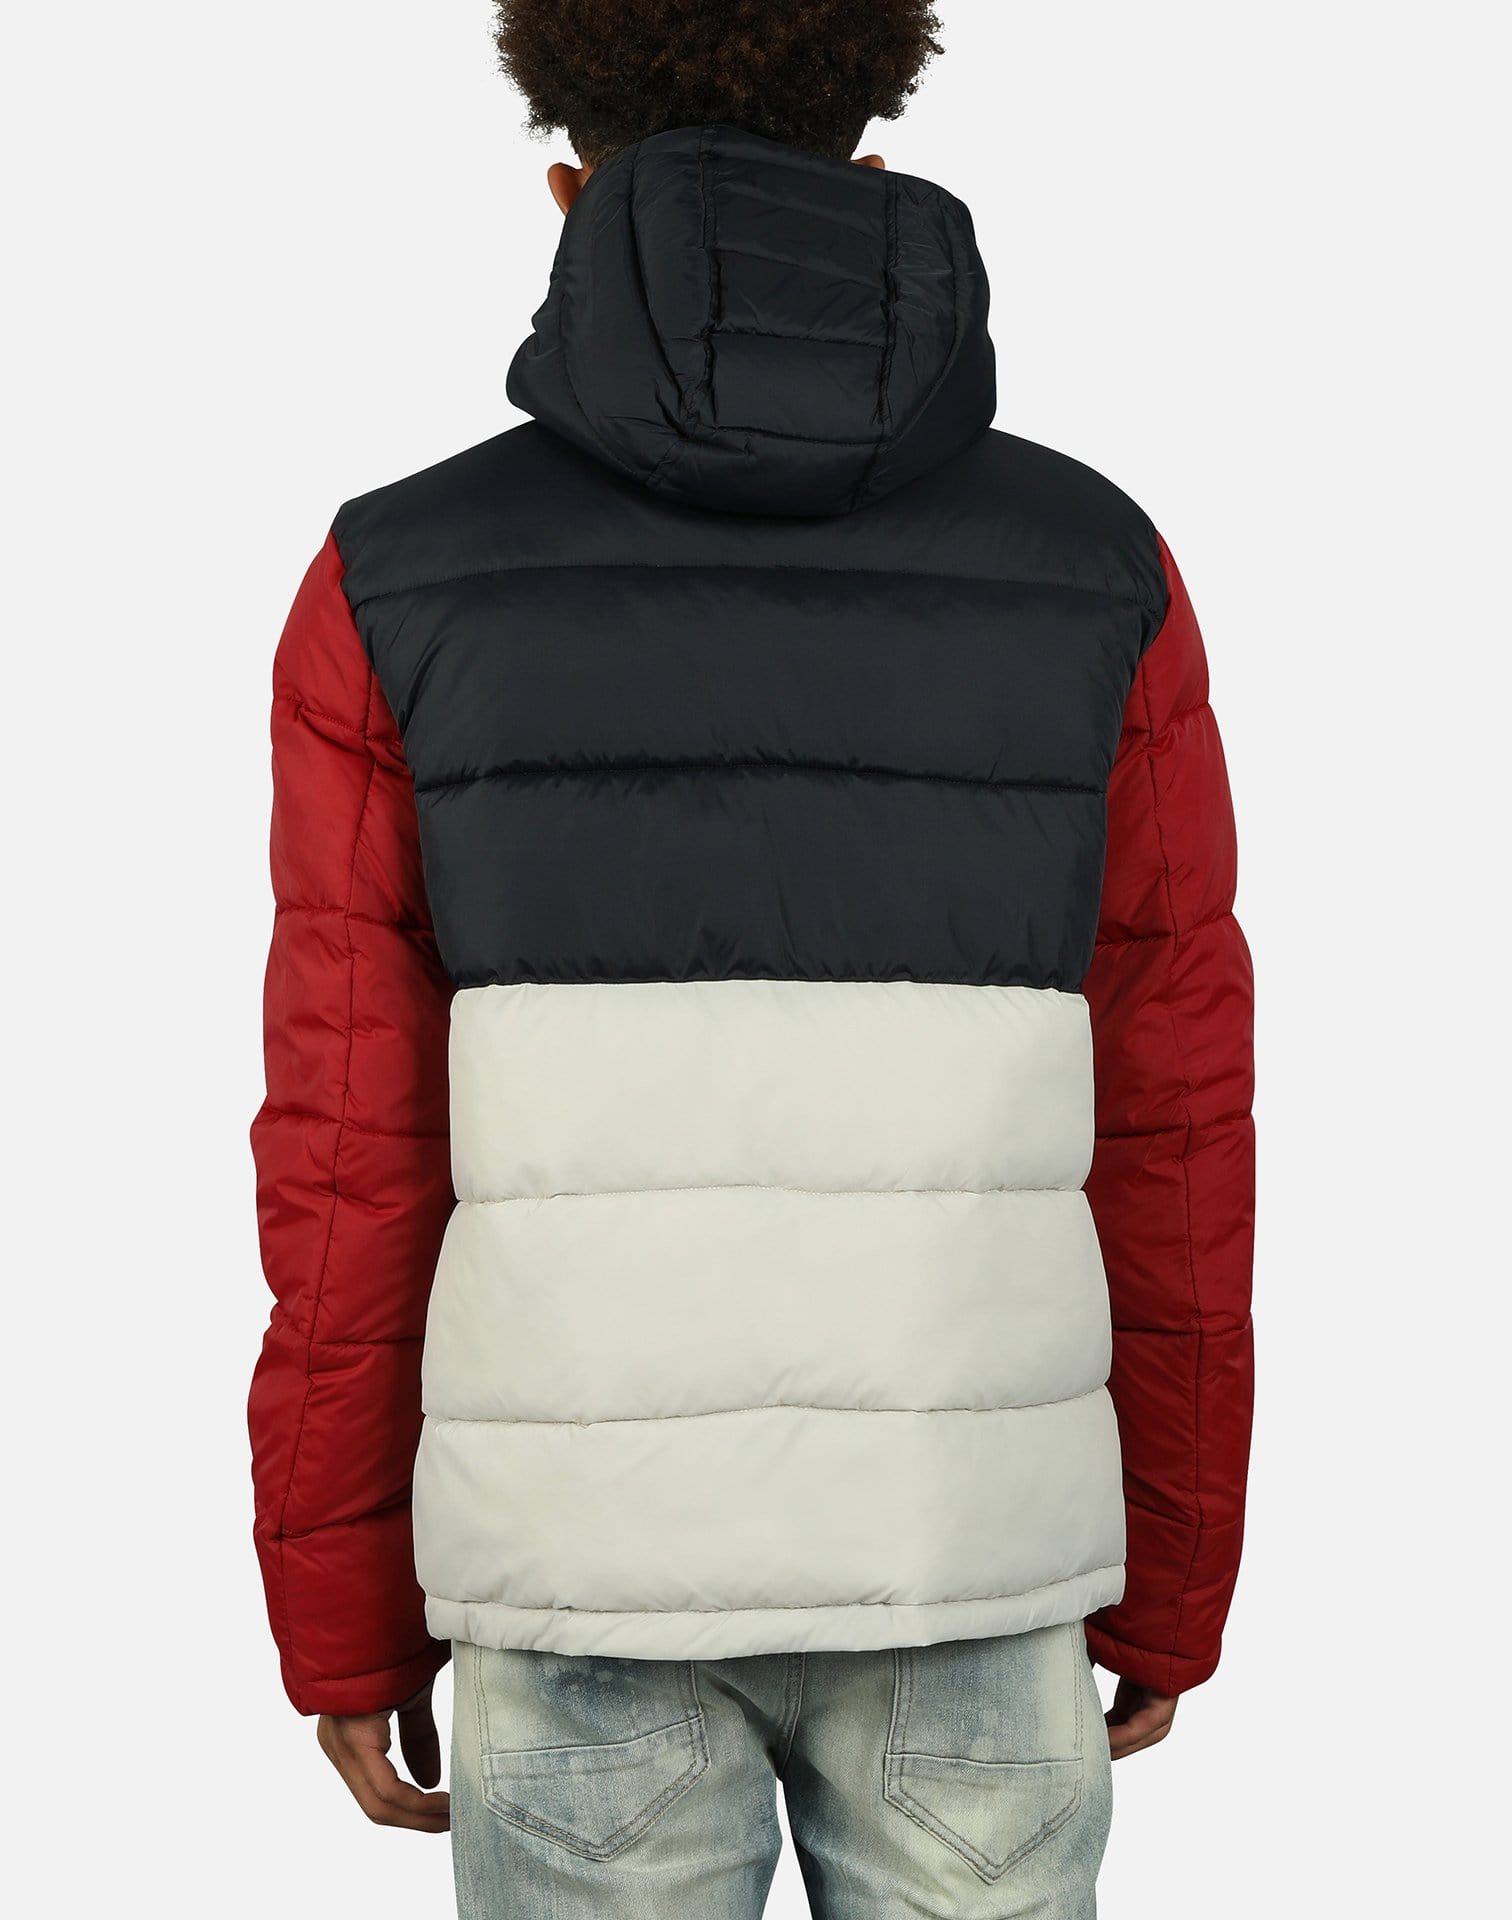 Tommy Hilfiger Men's Nylon Colorblock Puffer Jacket